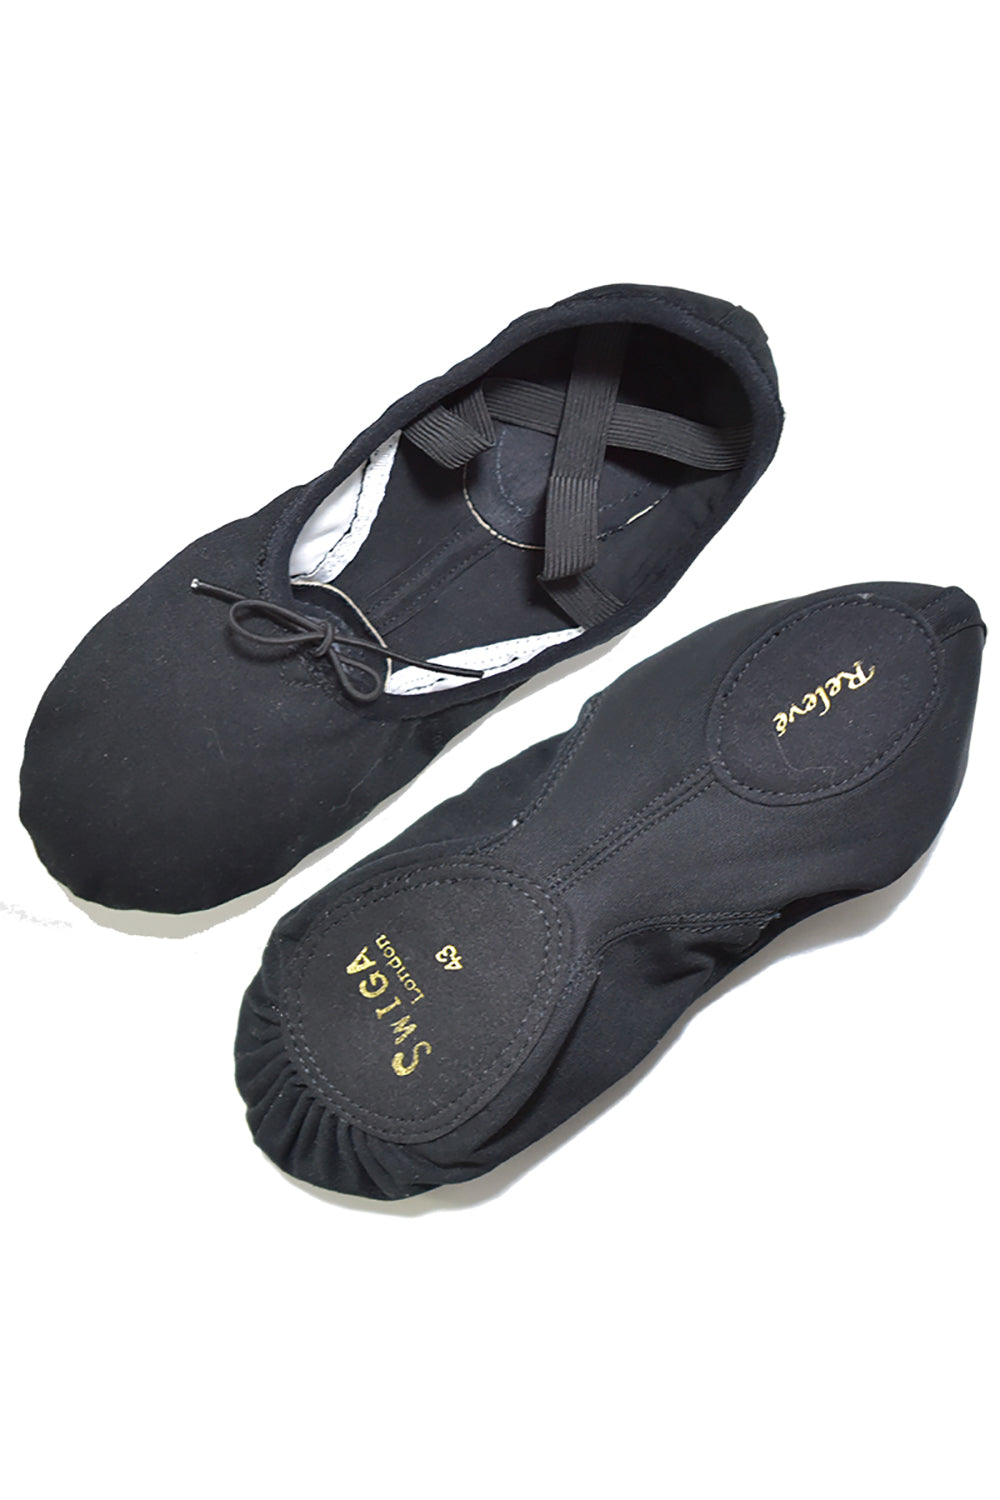 Br-6 Swiga Dance Shoes